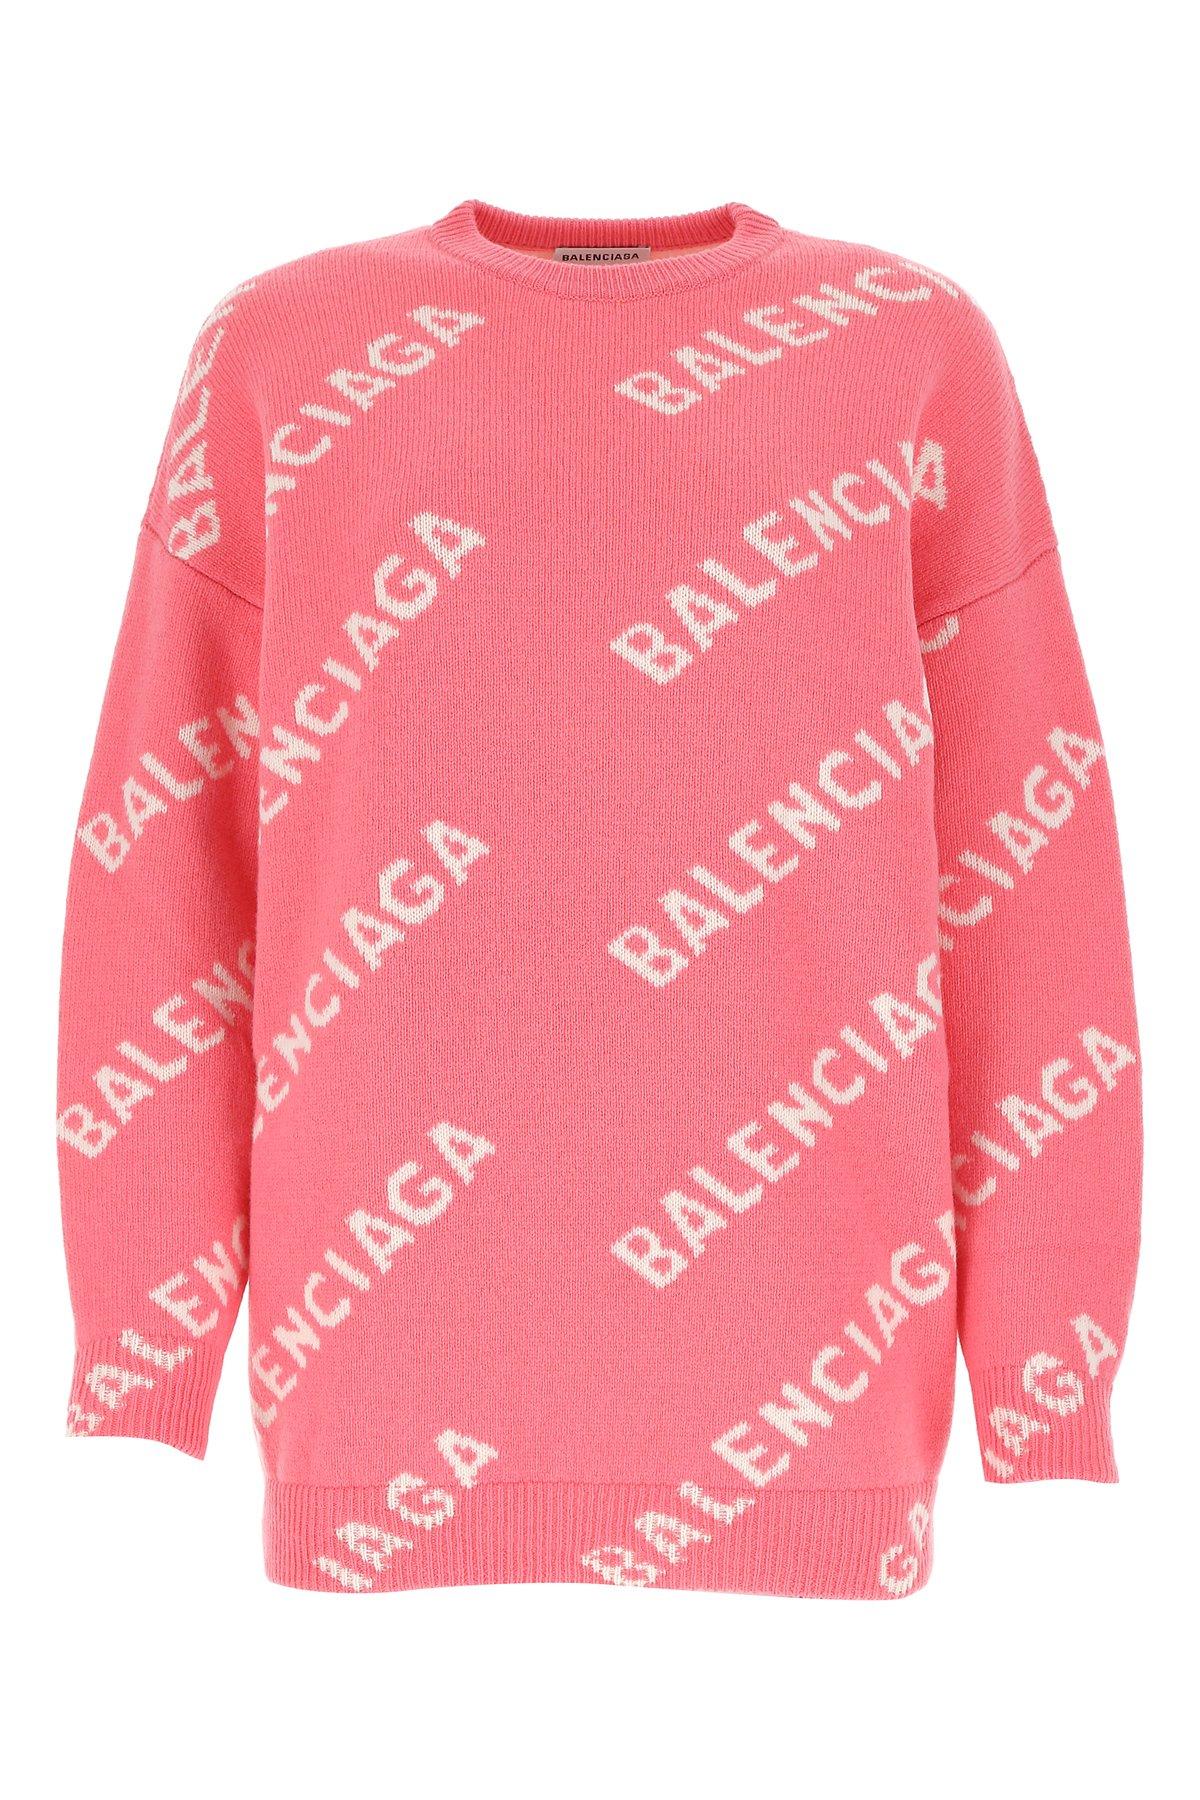 Balenciaga Synthetic Allover Logo Crewneck in Pink/White (Pink) - Save 59%  | Lyst